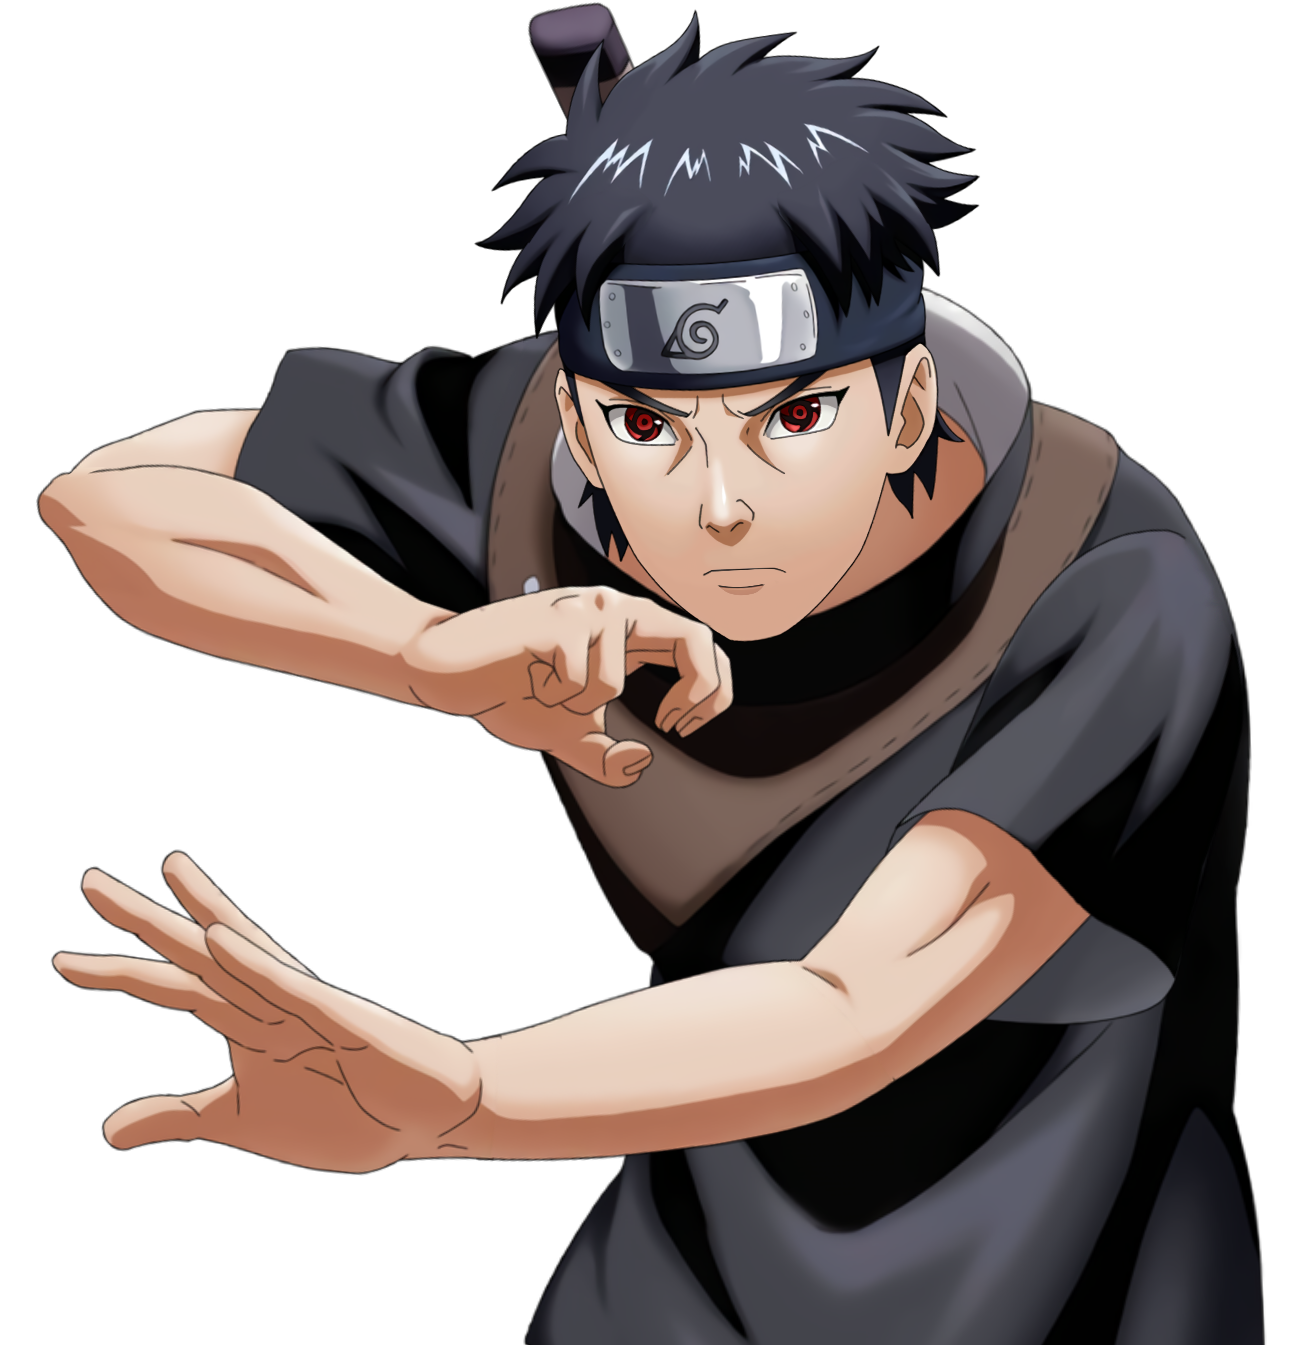 We need more uchiha members like shisui : r/NarutoShinobiStriker